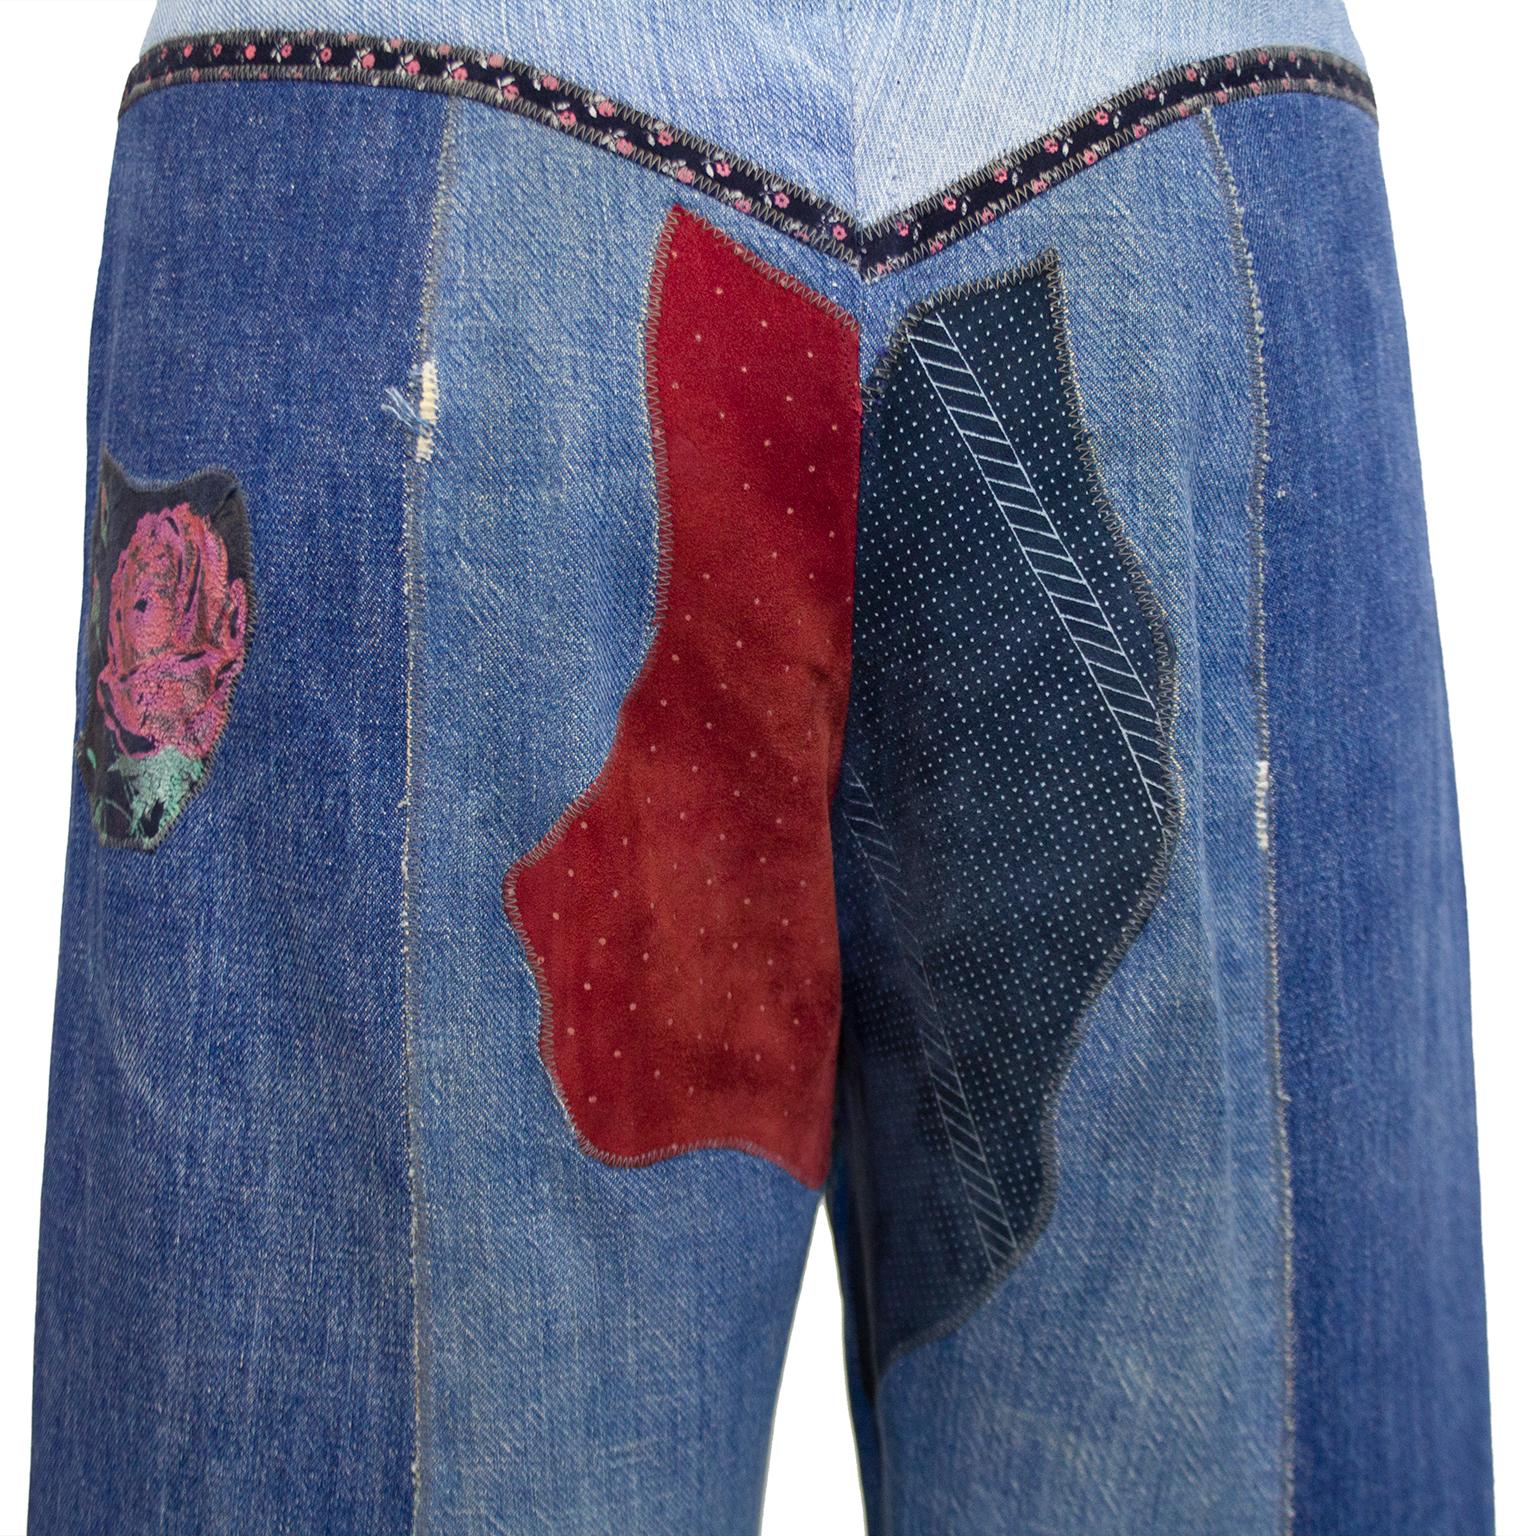 flower patchwork jeans